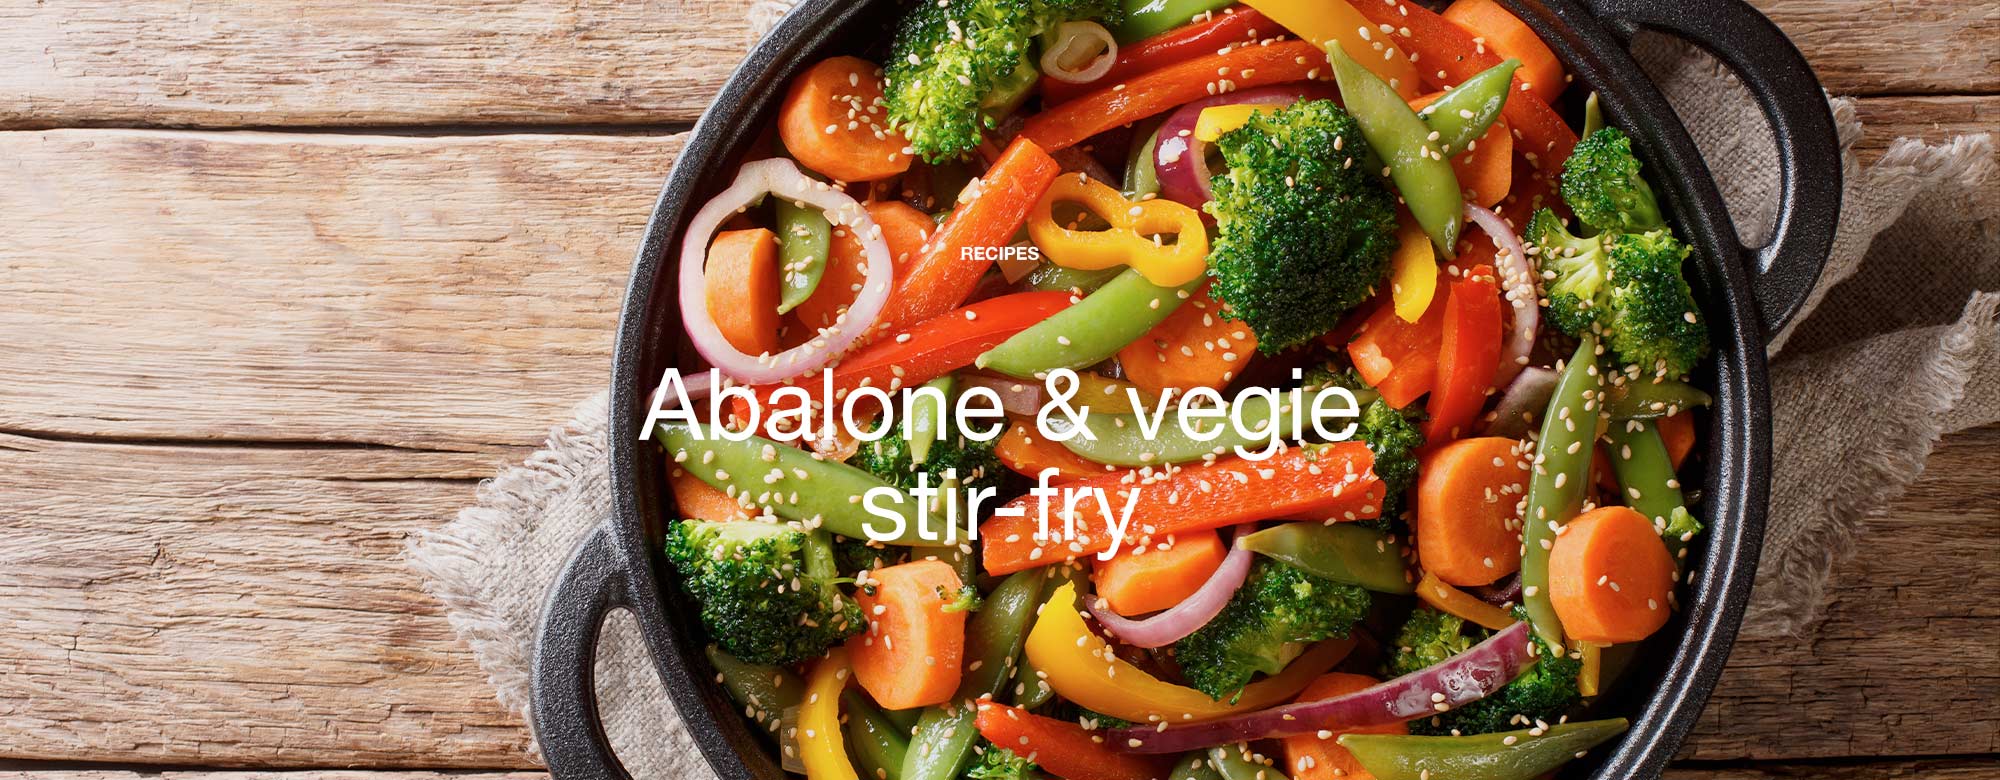 Abalone & vegie stir-fry